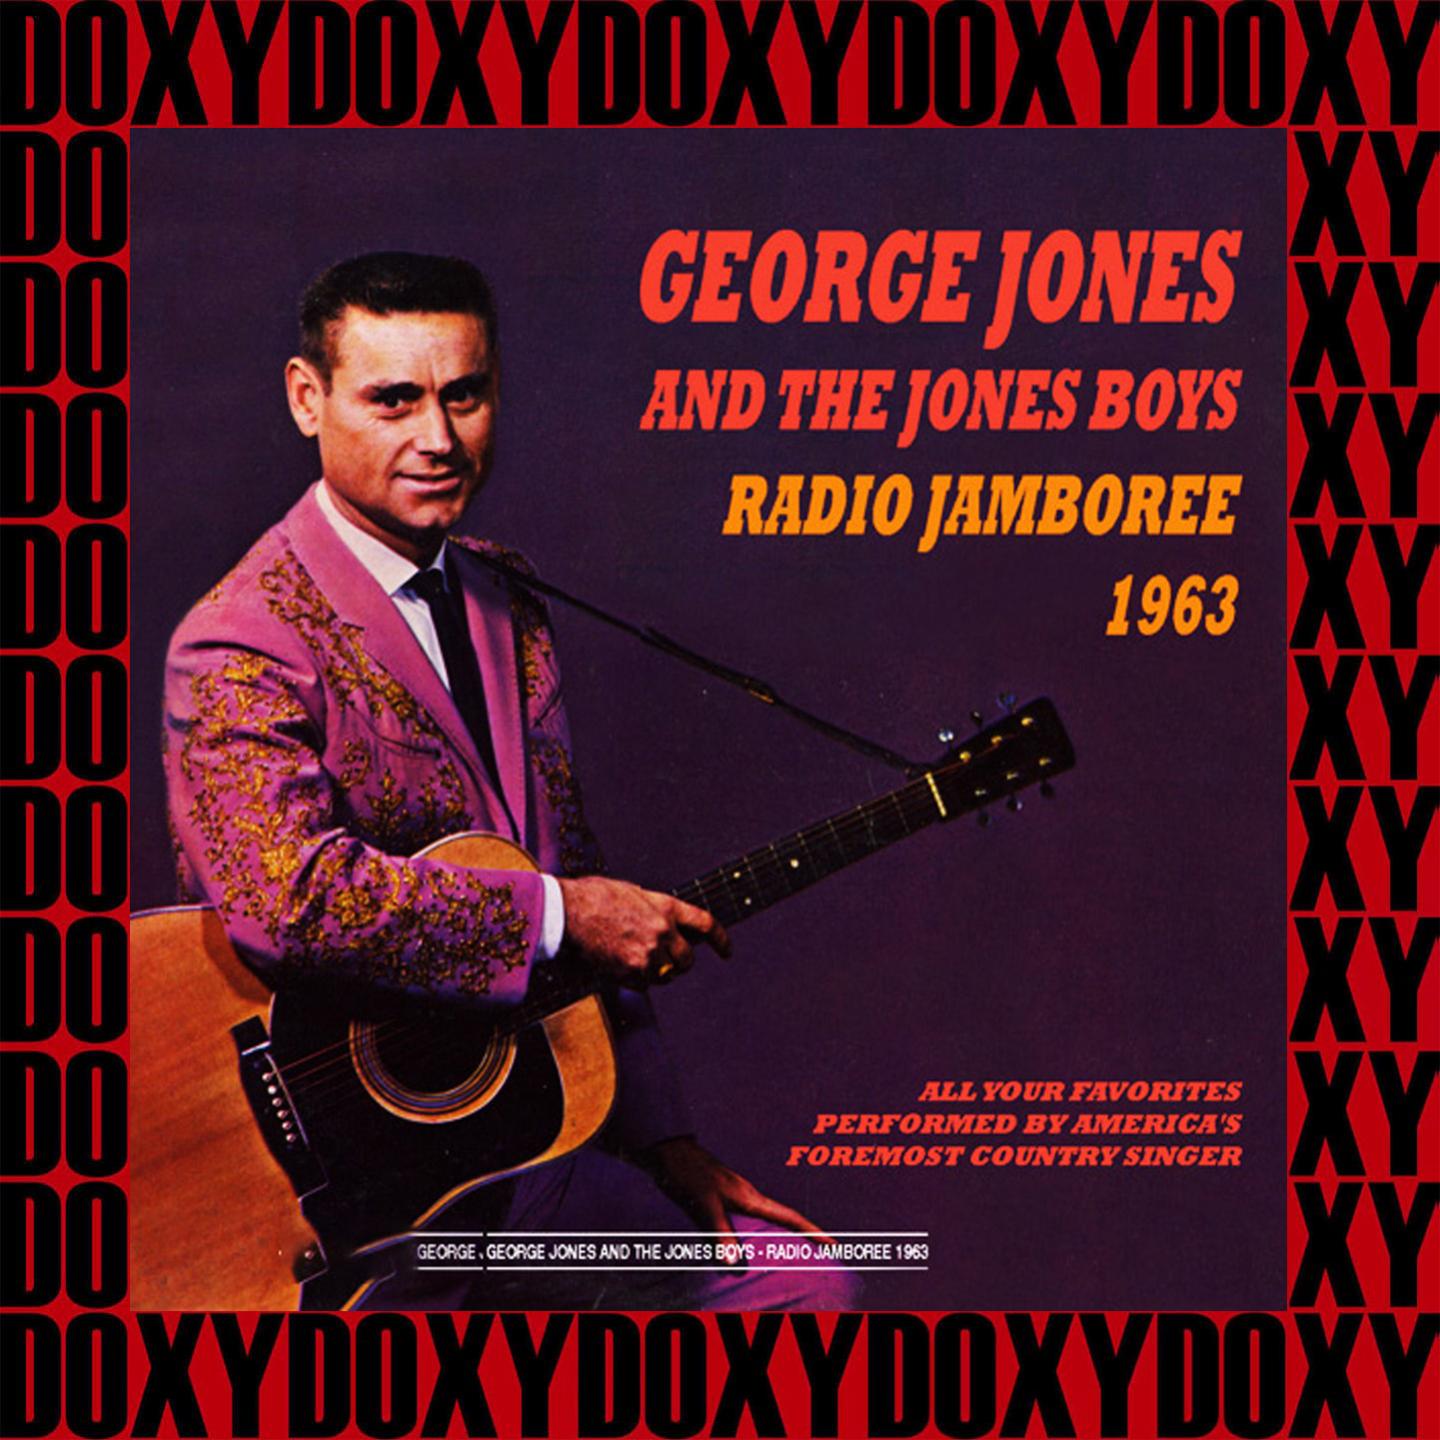 Radio Jamboree (Remastered Version) (Doxy Collection)